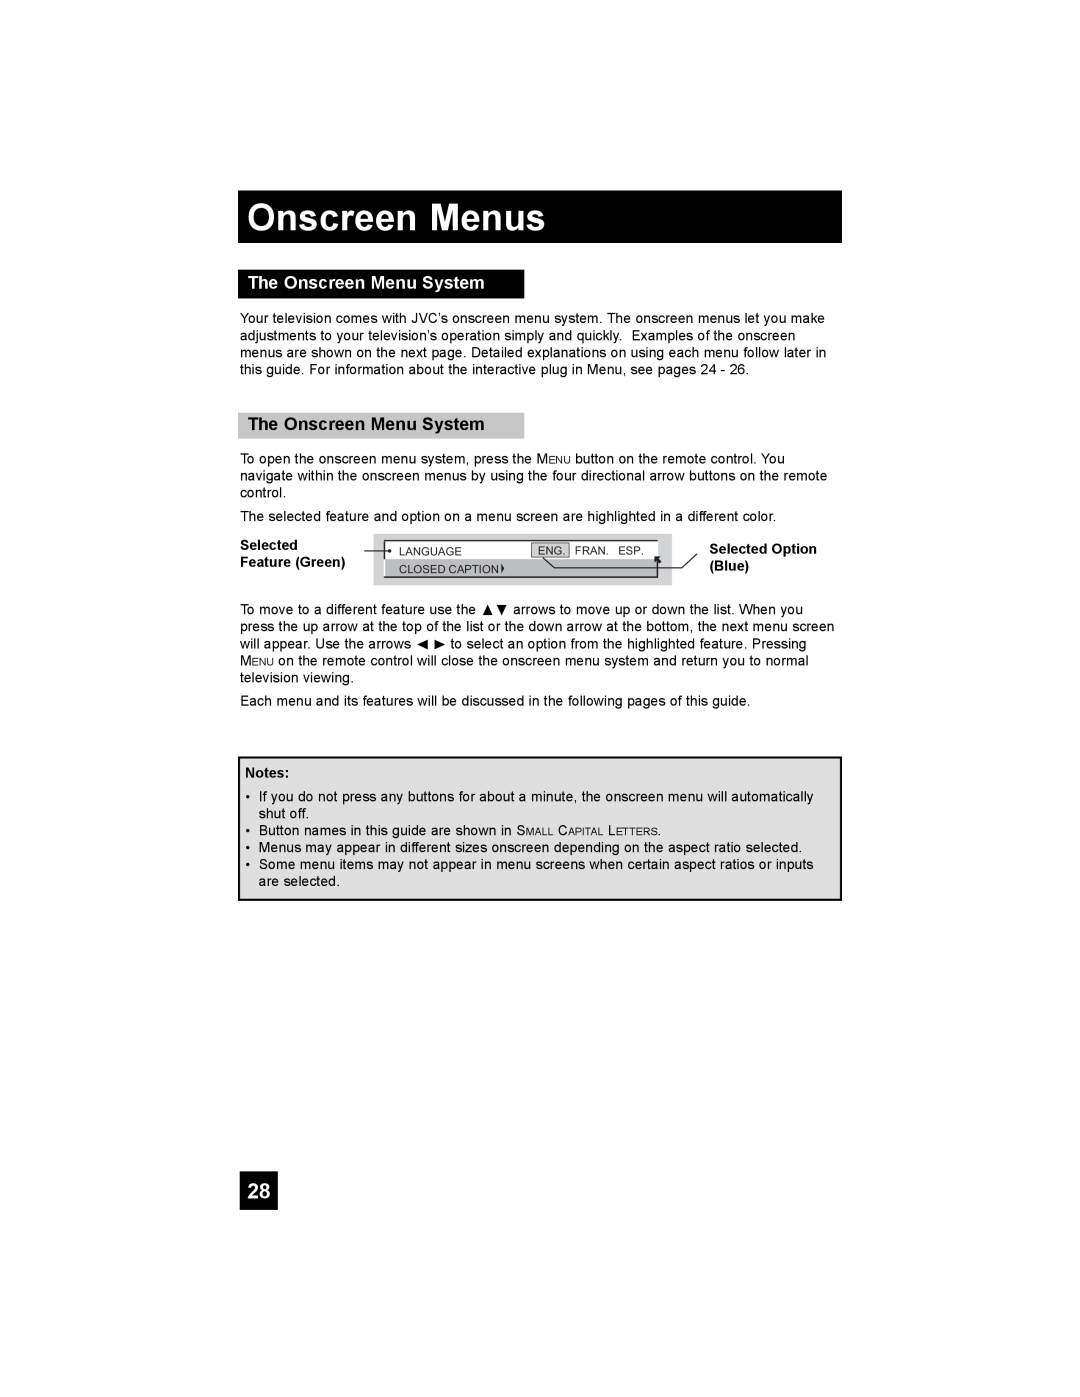 JVC LT-42X898, LT-37X898 manual The Onscreen Menu System, Selected Option Blue, Onscreen Menus 